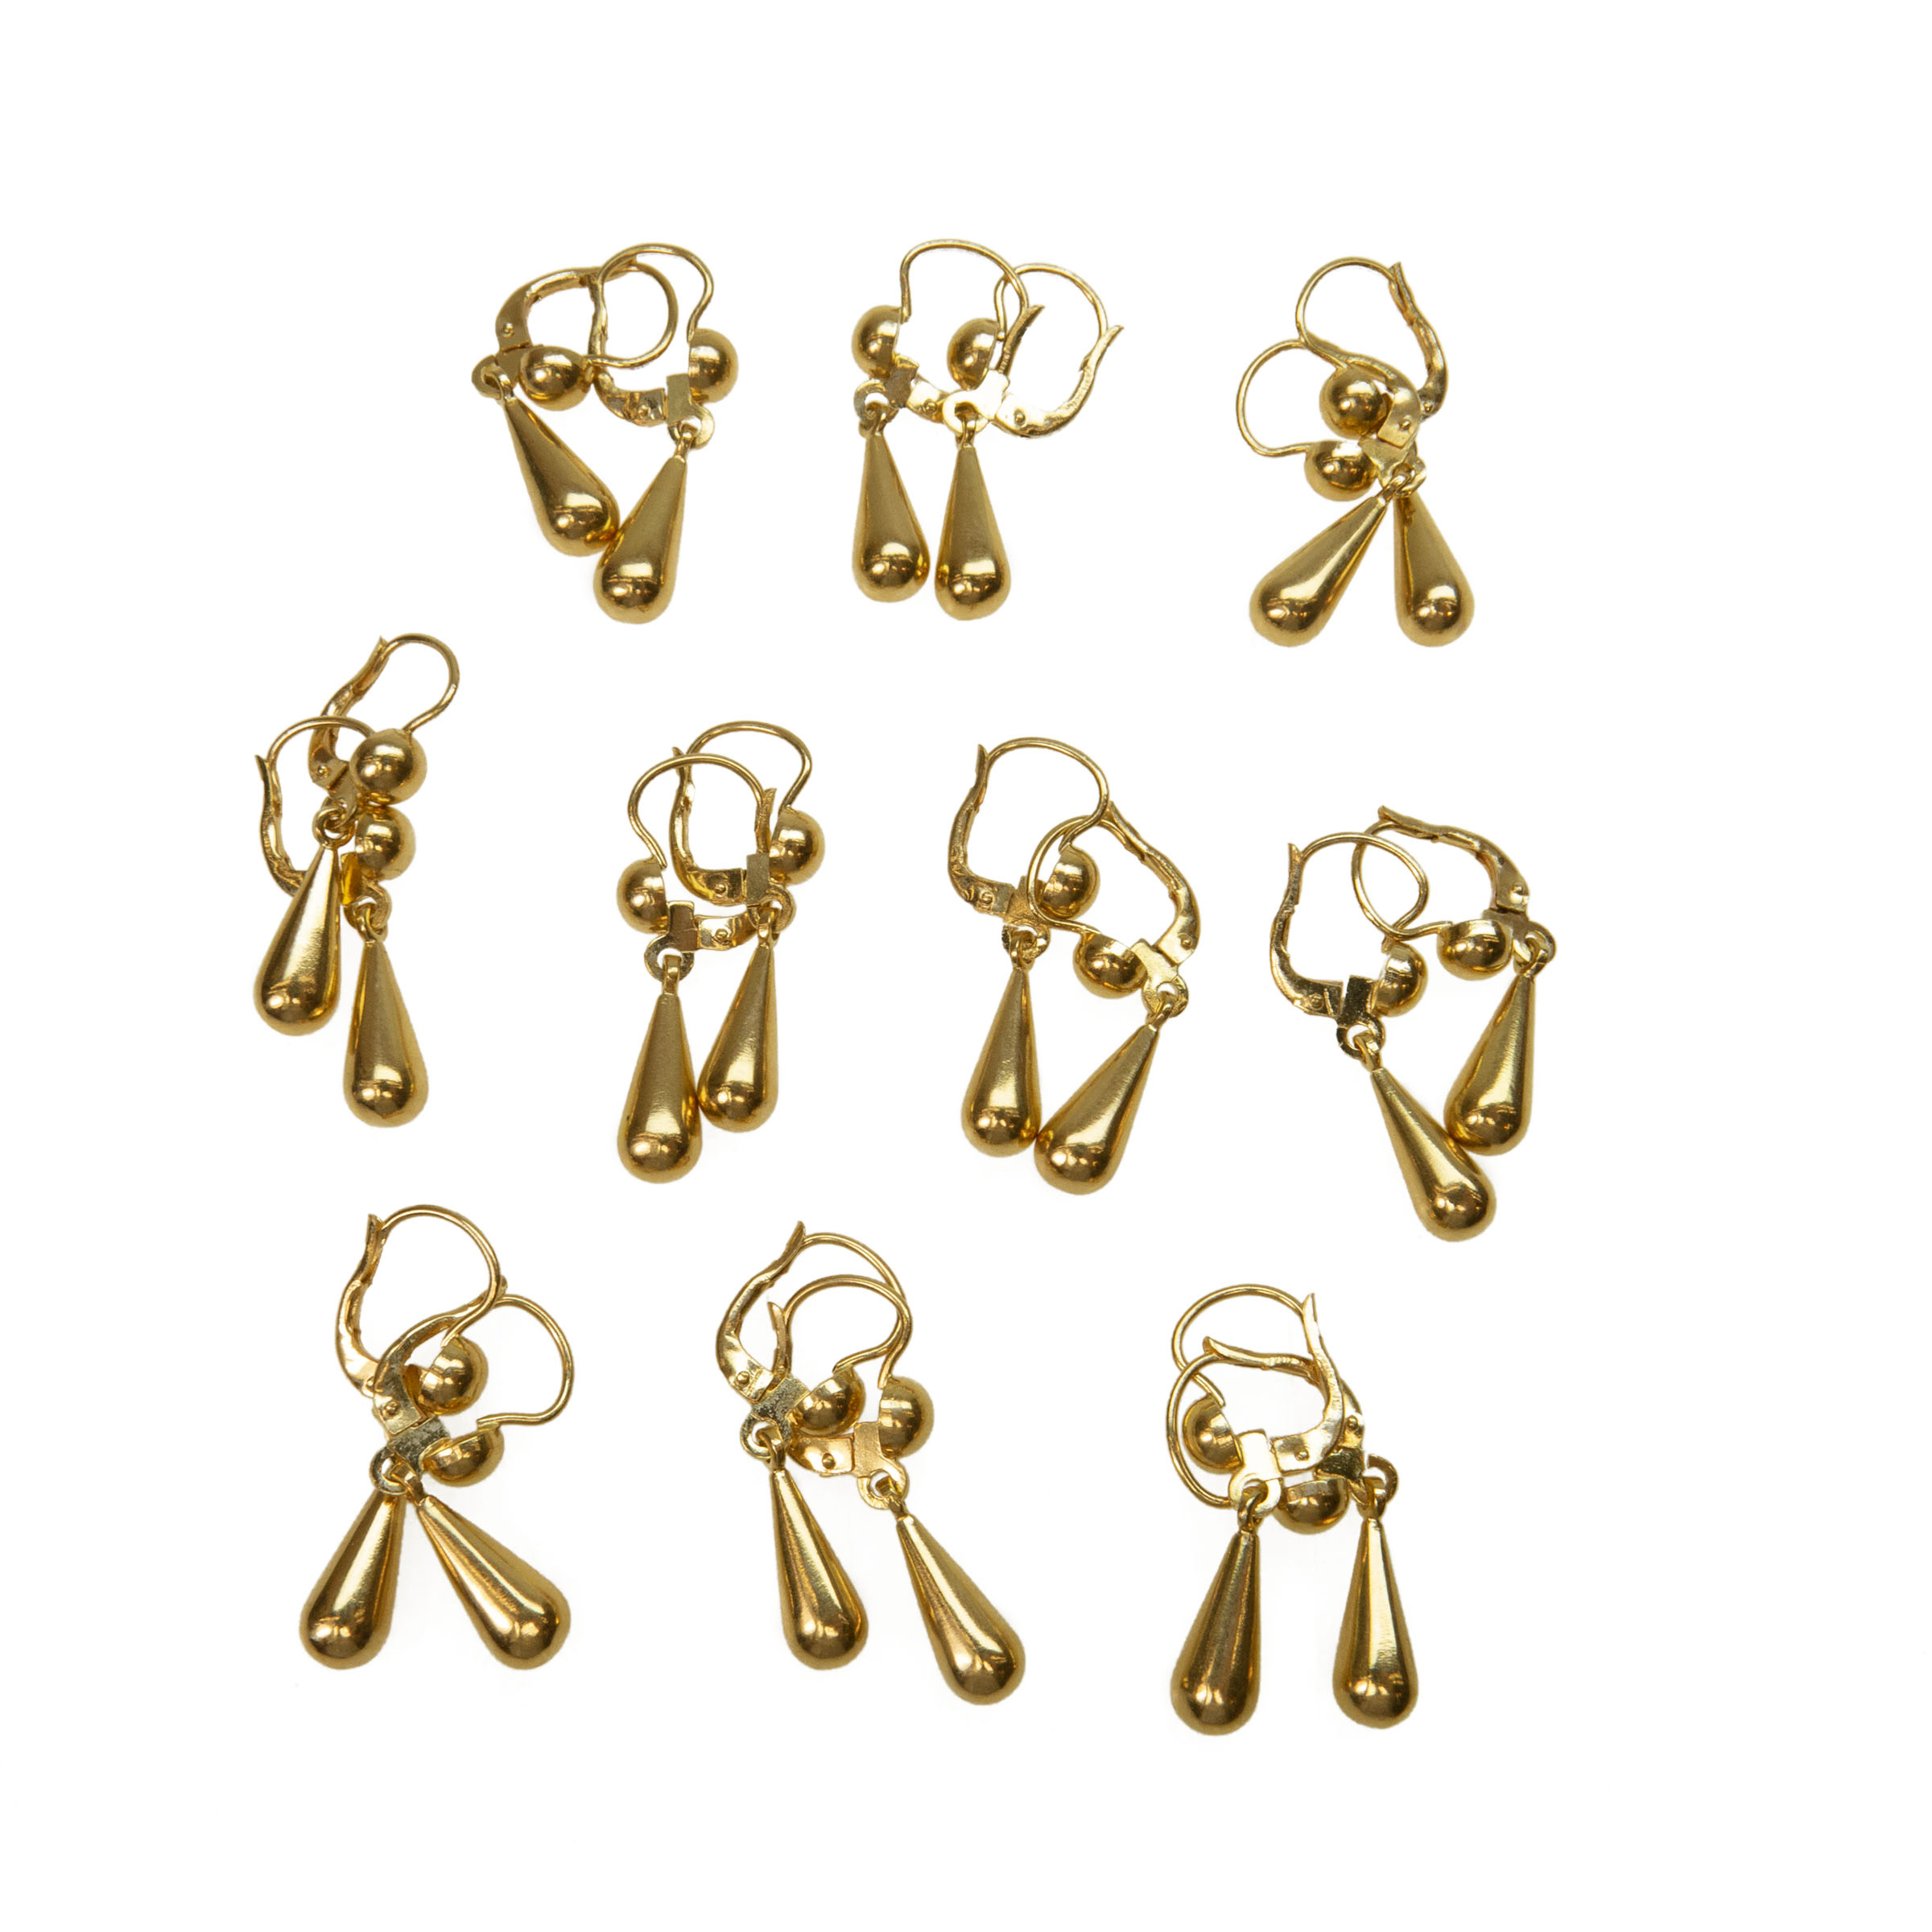 10 X Pairs Of 18K Yellow Gold Drop Earrings